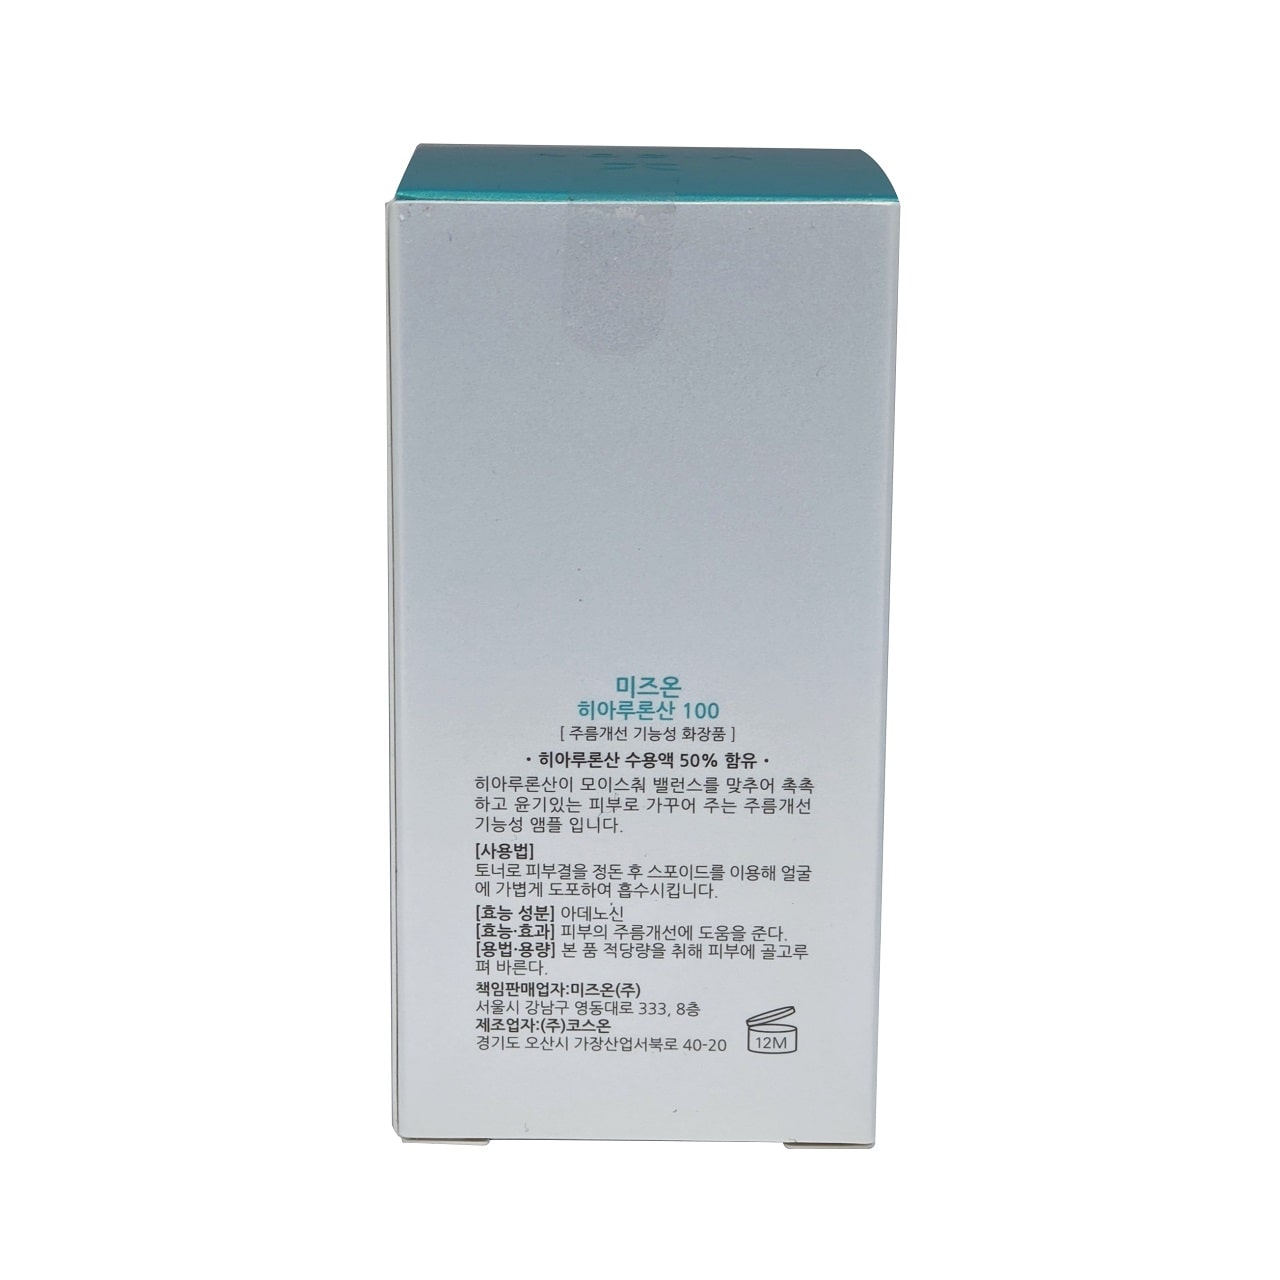 Product details for Mizon Hyaluronic Acid 100 Facial Serum in Korean